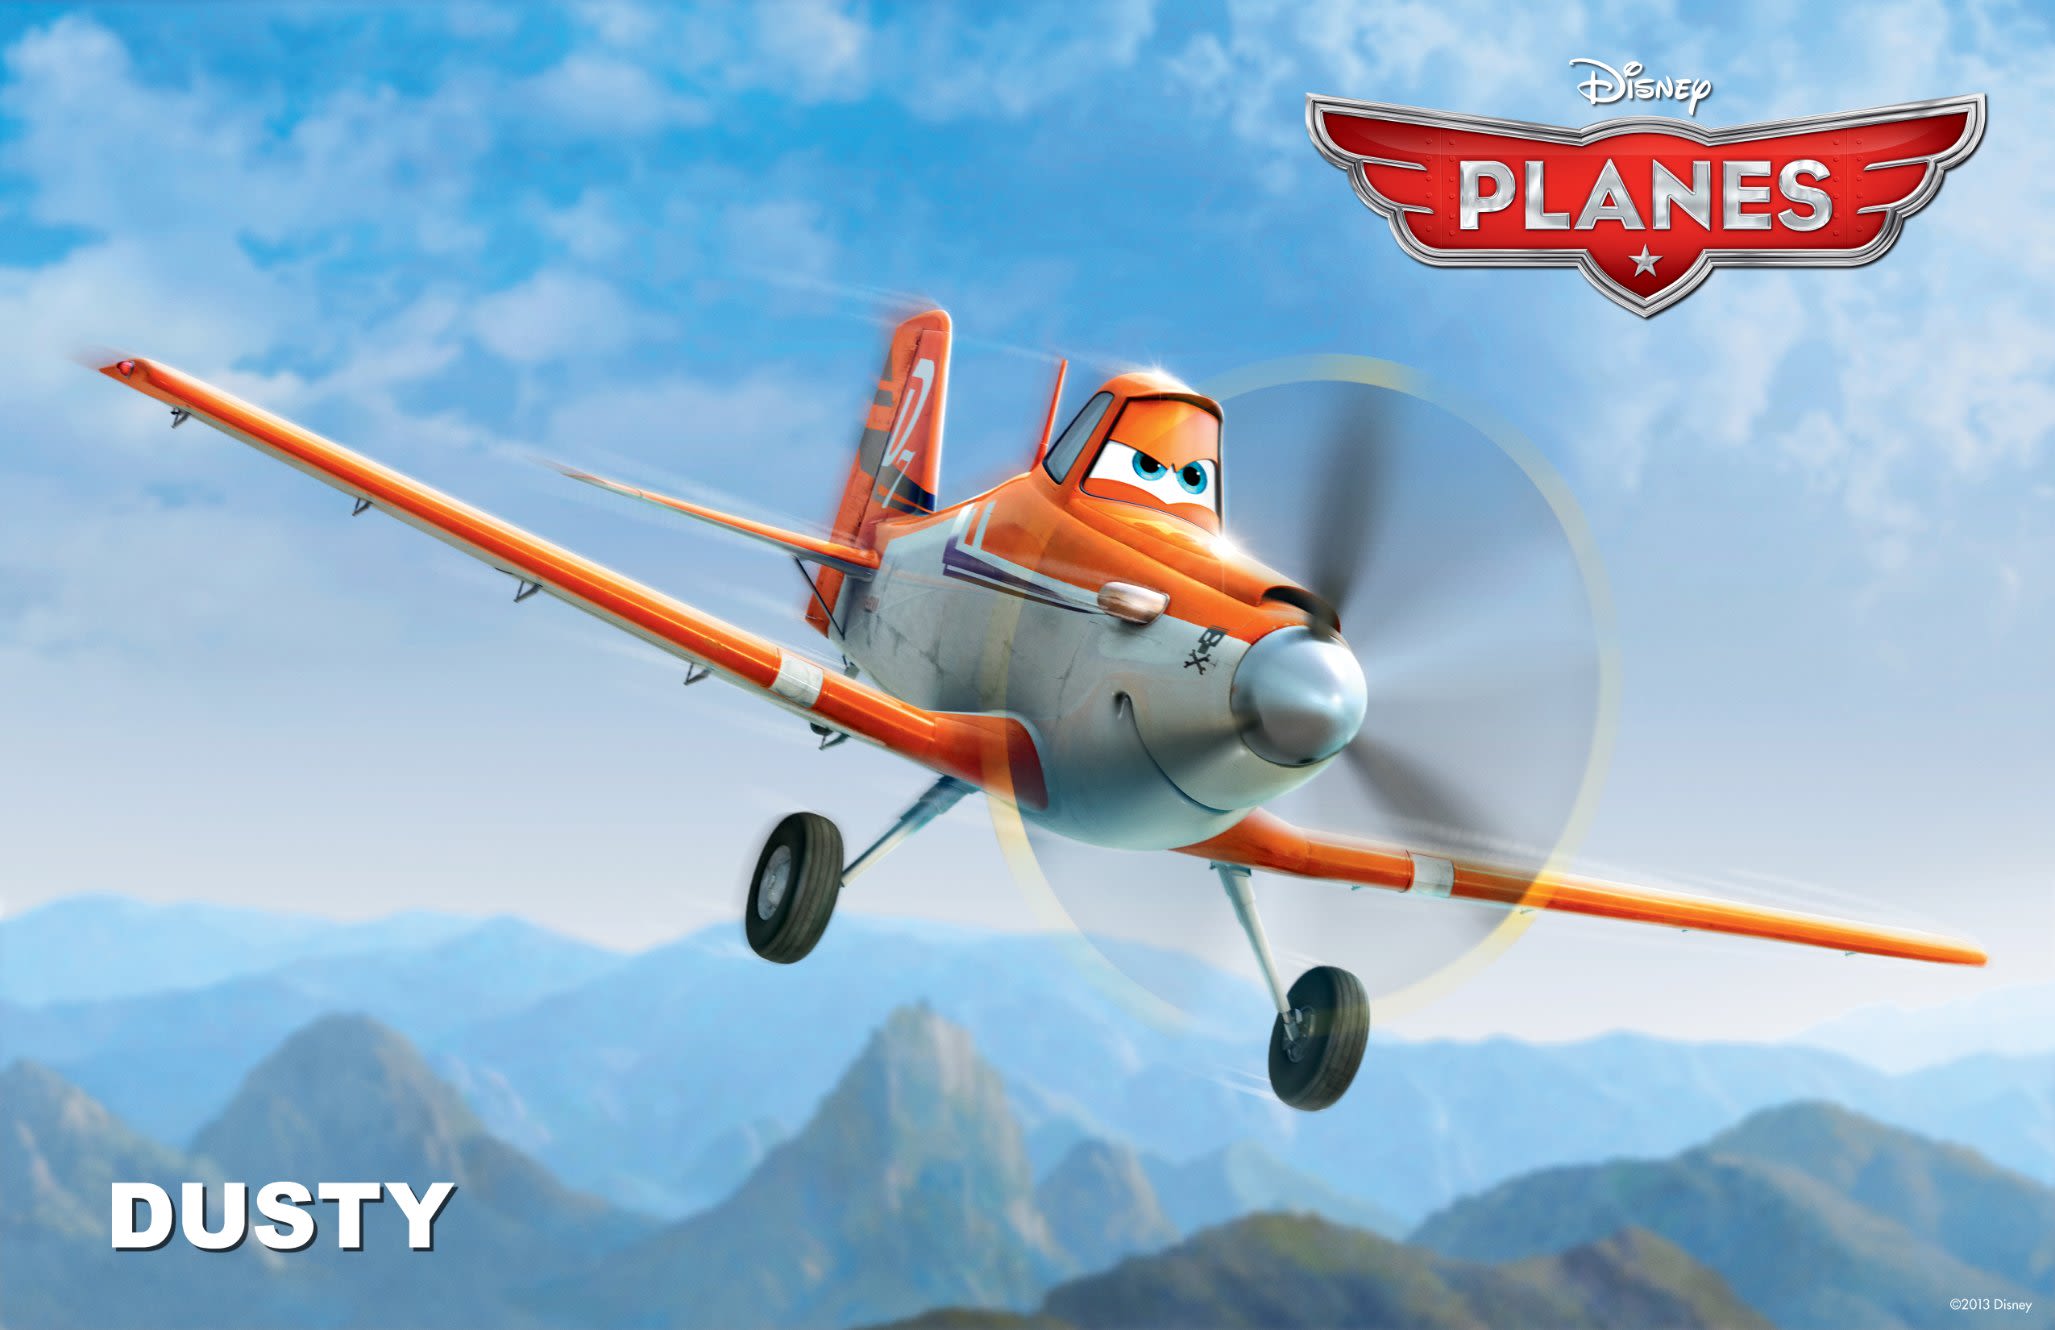 Meet the pilot who | kept CNN flying right \'Planes\' film Disney\'s